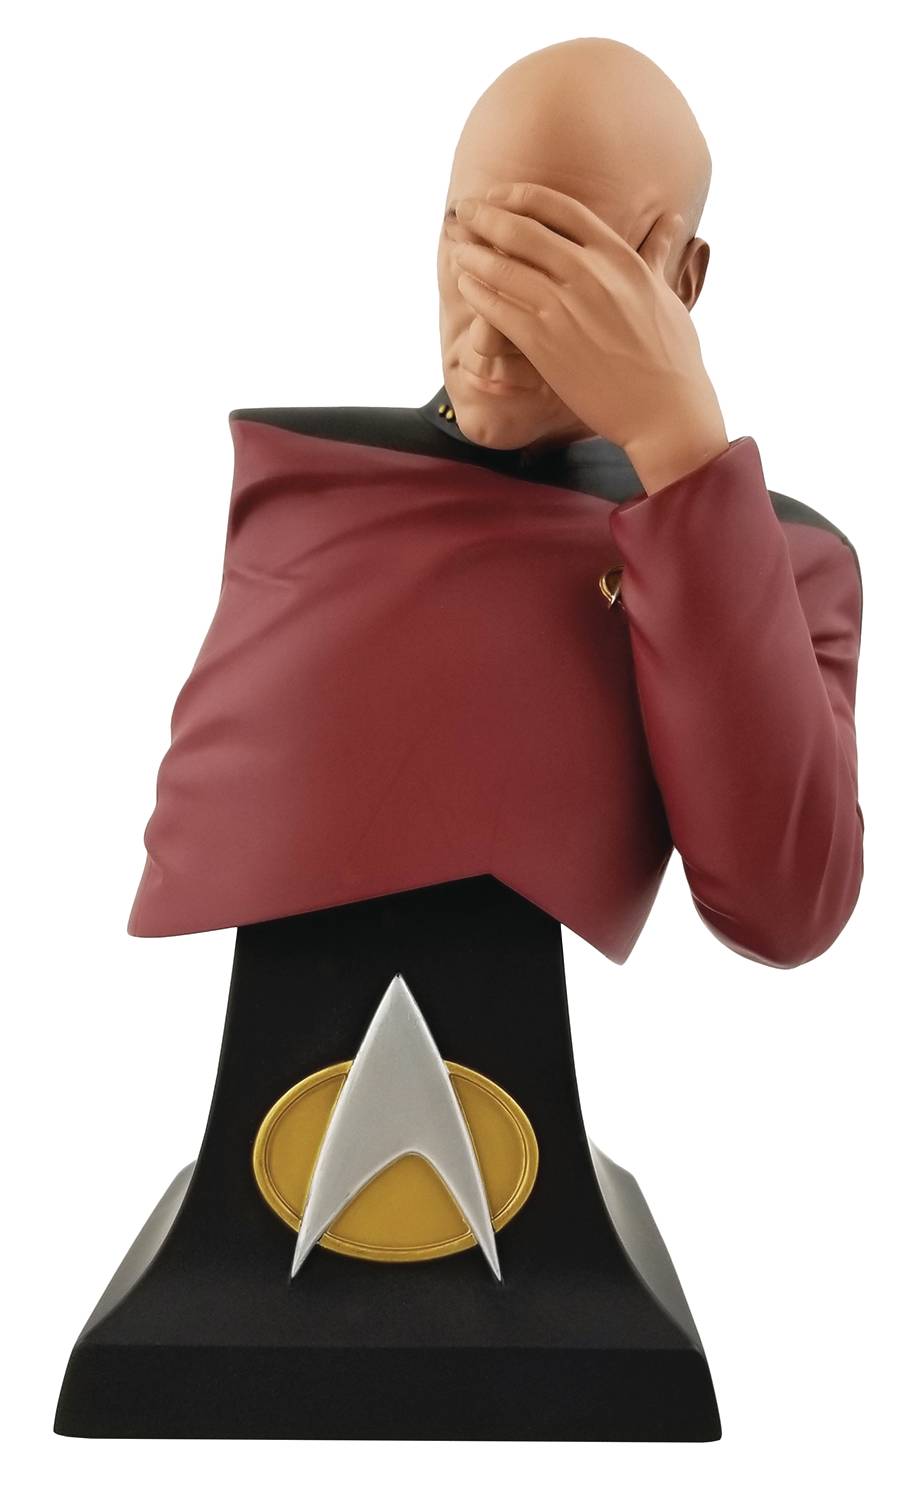 San Diego ComicCon 2020 Star Trek Tng Picard Facepalm Limited Edition Bust